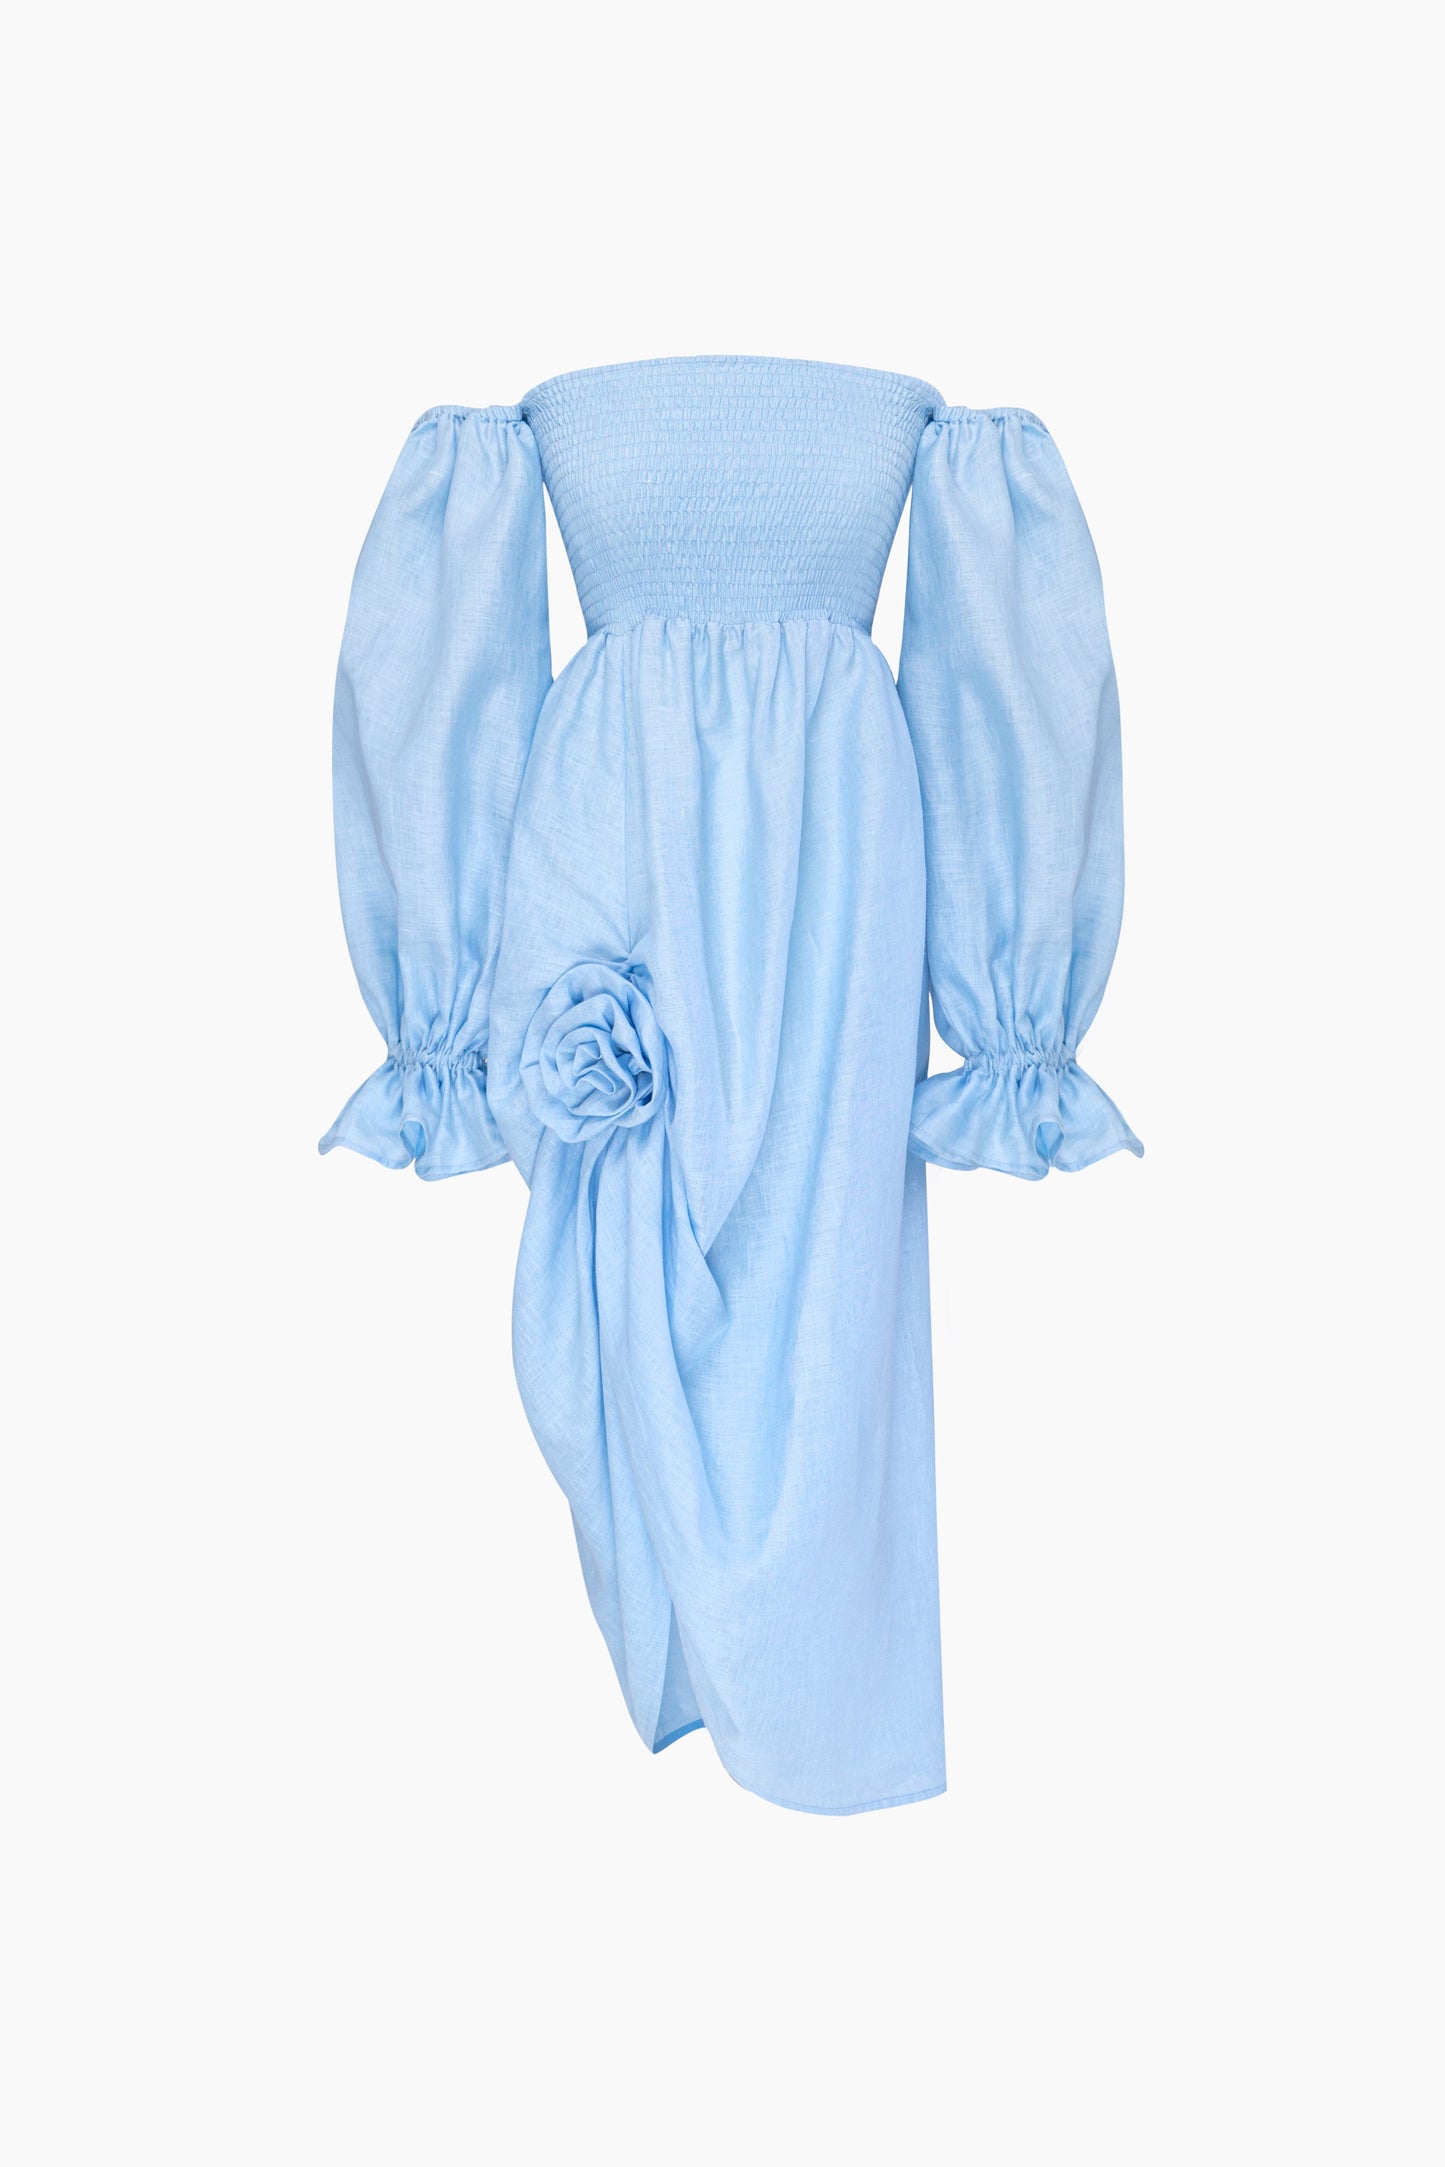 Atlanta Linen Dress with Rose Detail in Blue